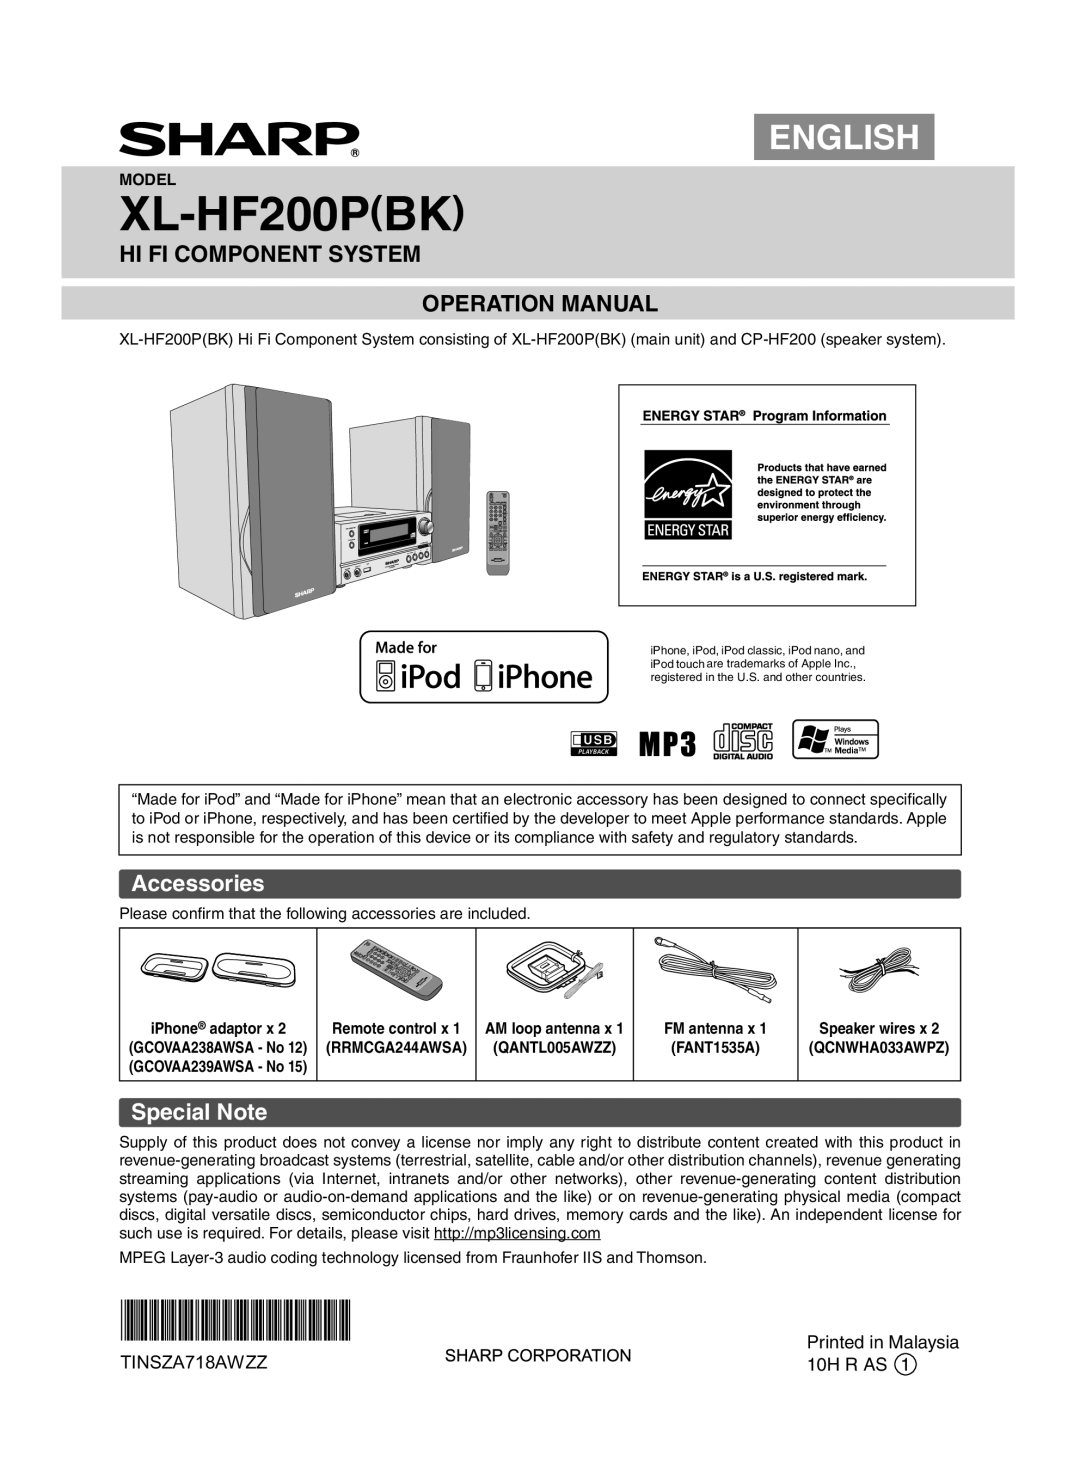 Sony XL-HF200P(BK) operation manual Accessories, Special Note, XL-HF200PBK, English, TINSZA718AWZZ 